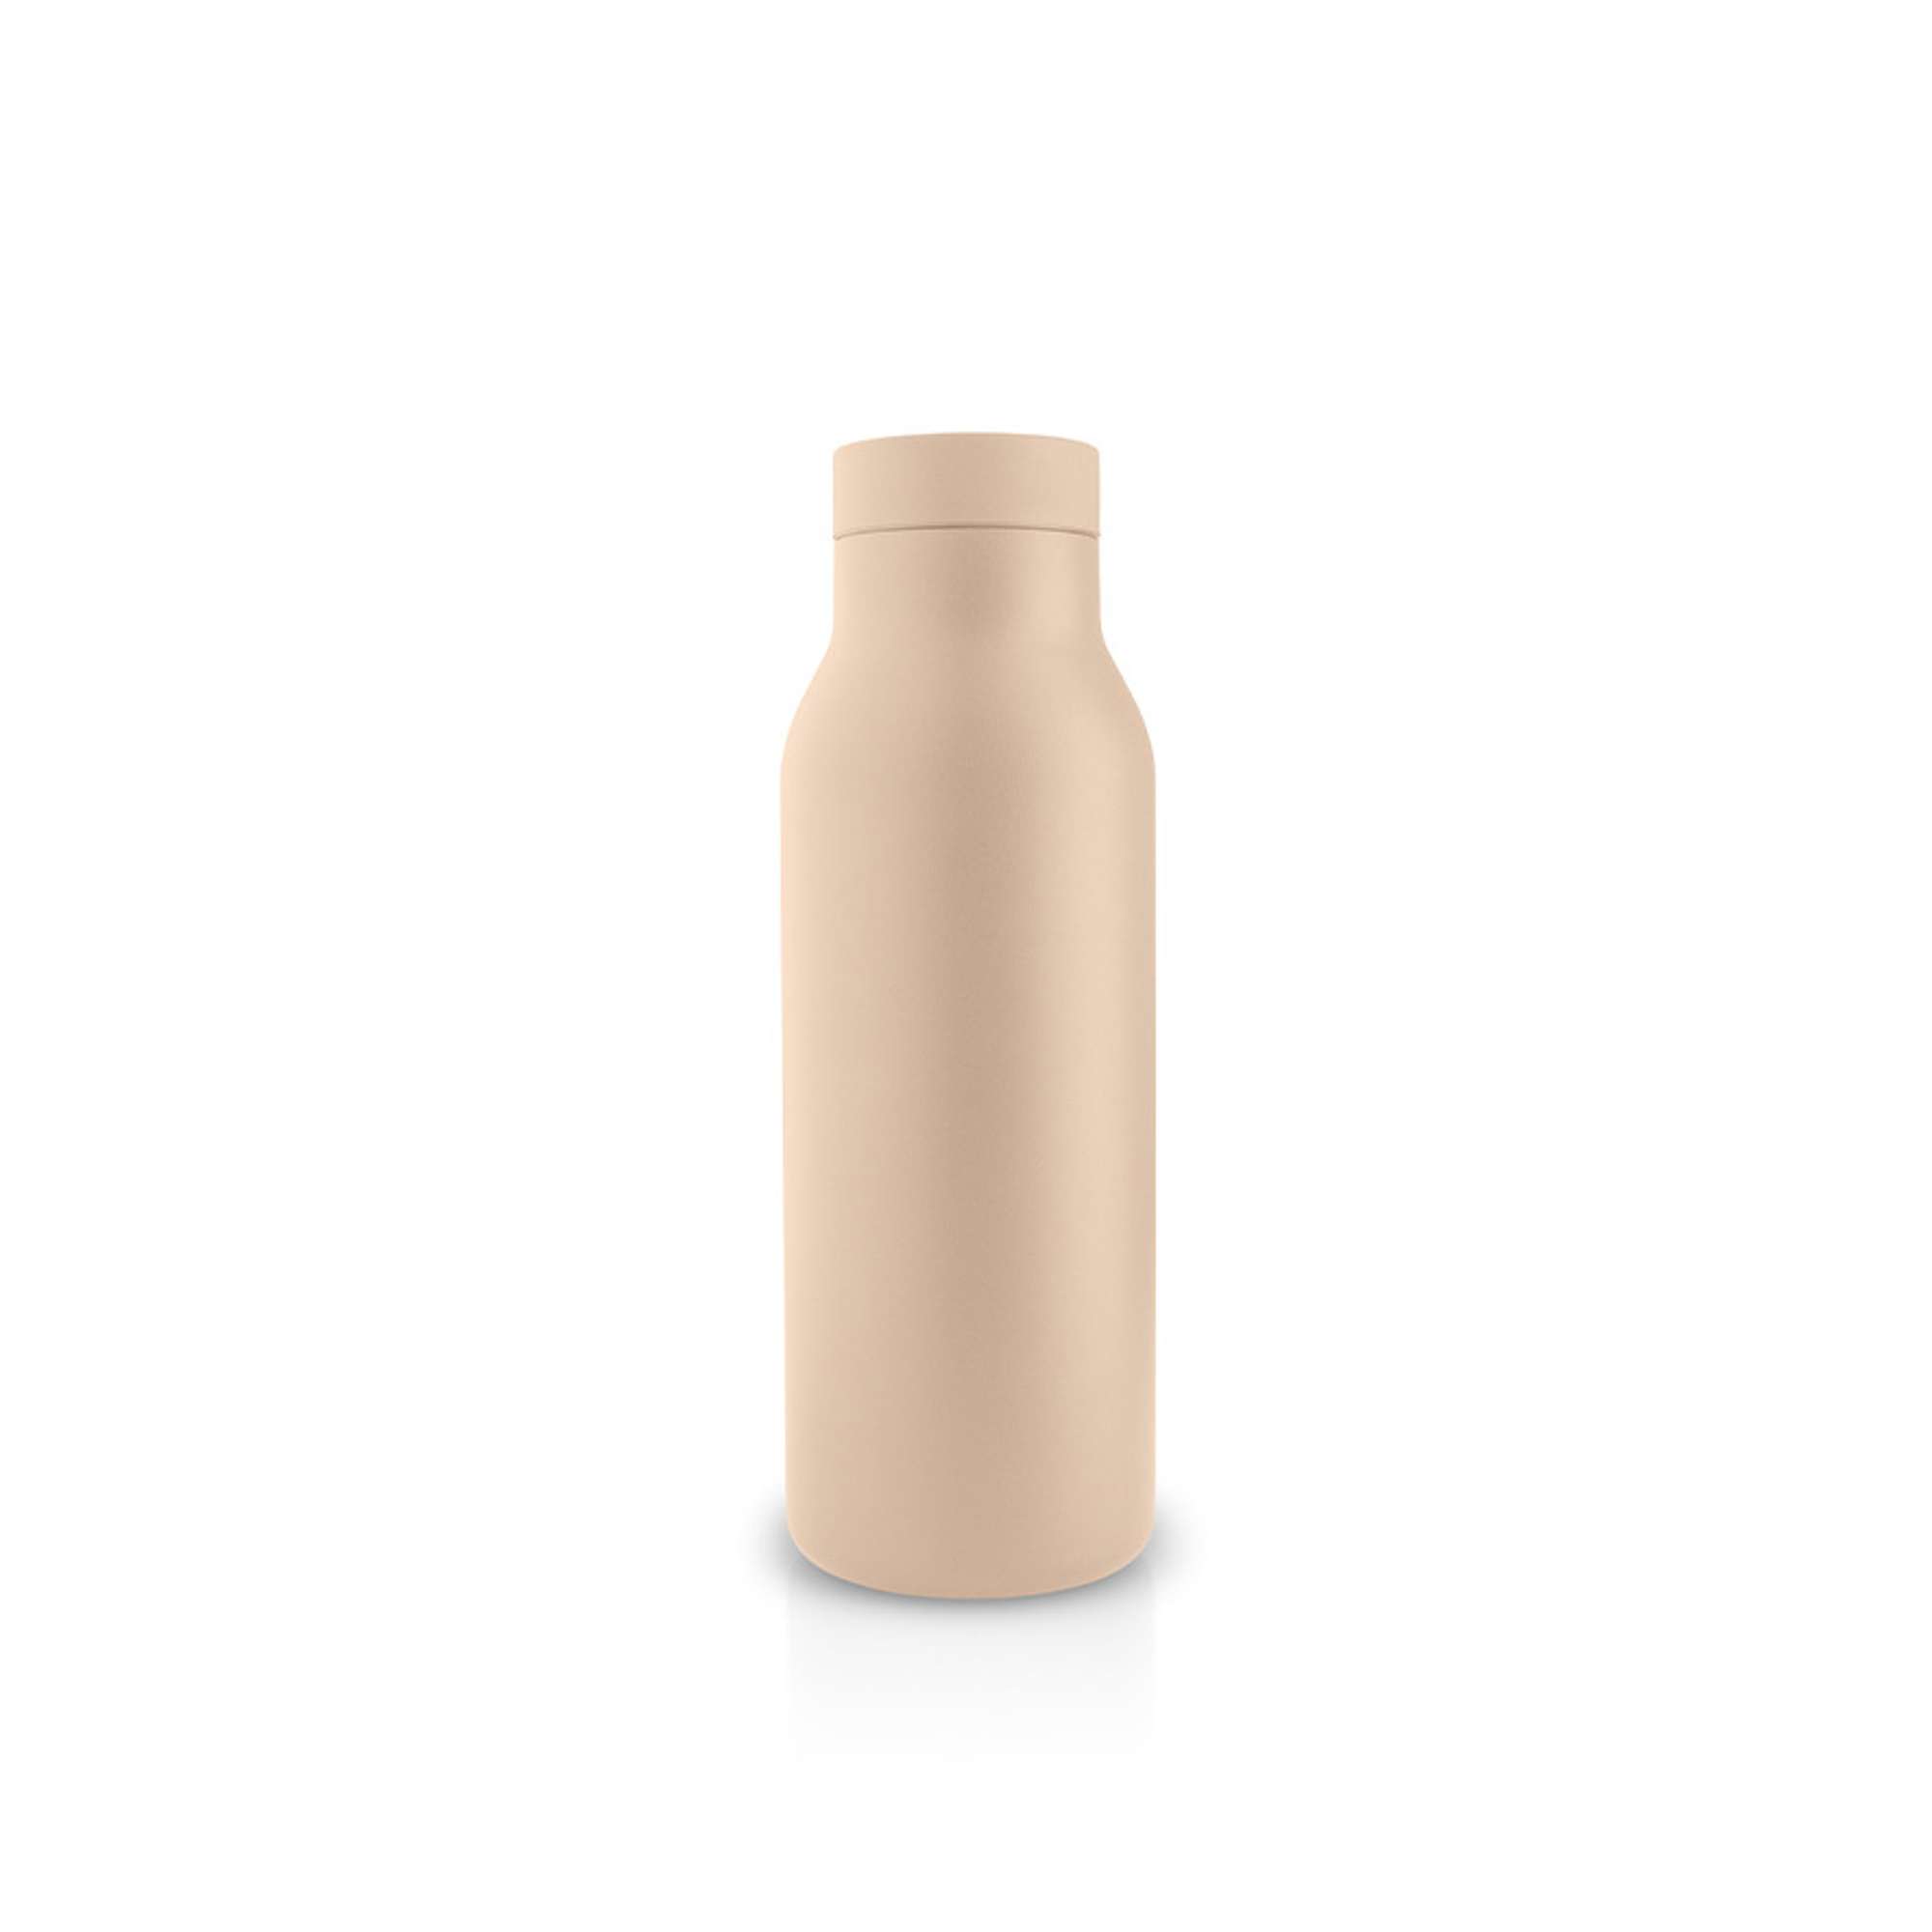 Urban termoflaske - 0.5 litres - Soft beige